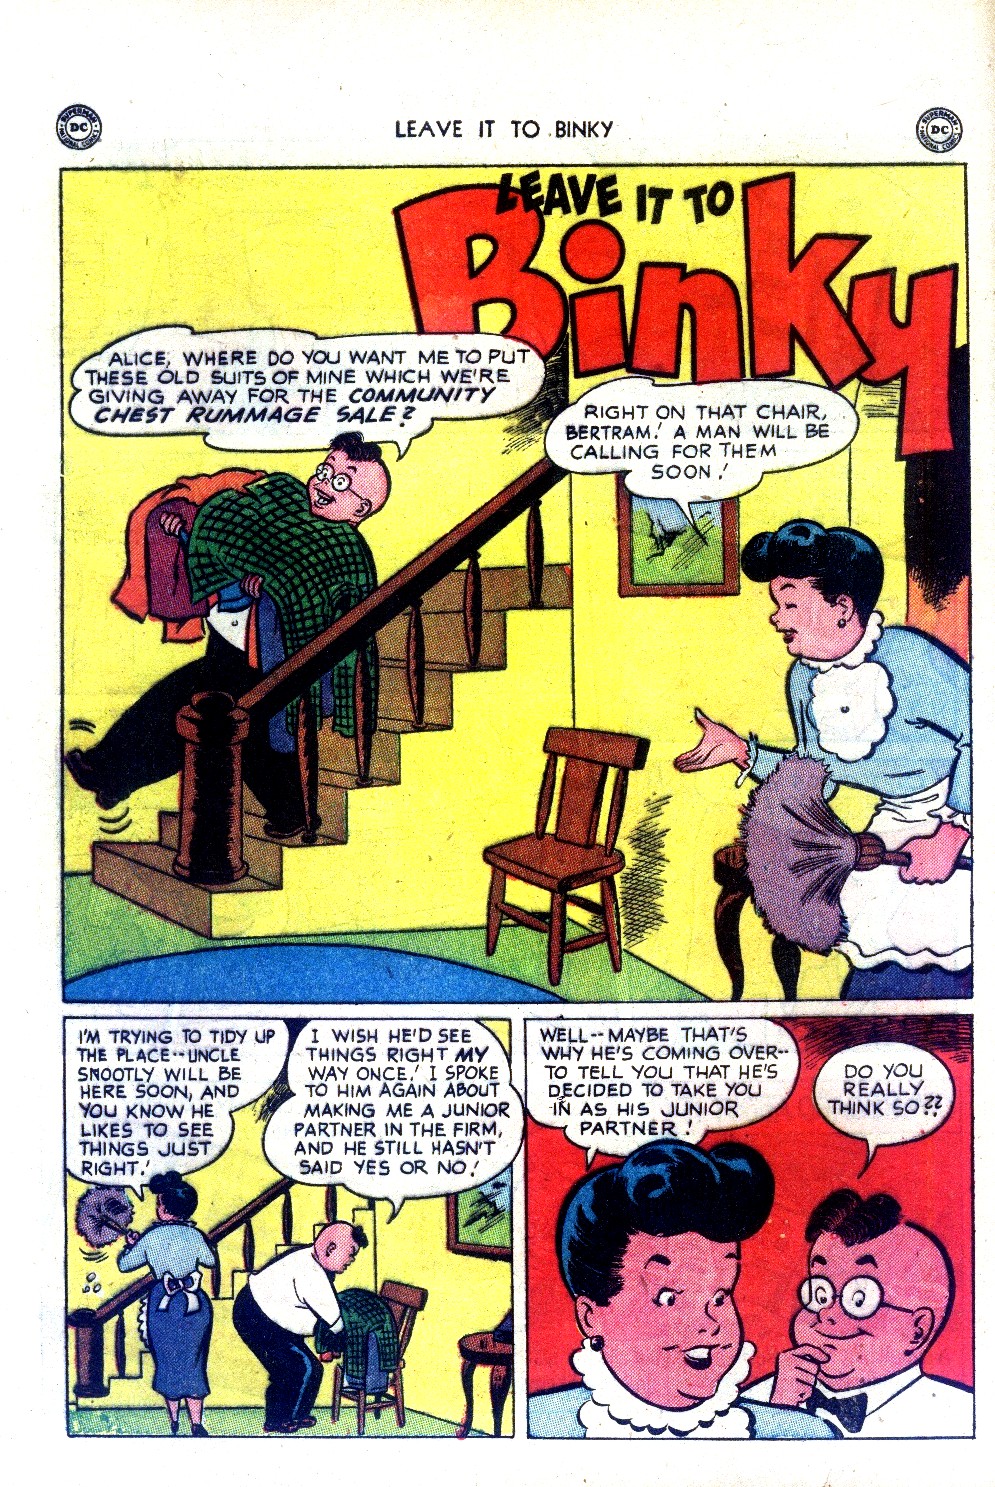 Read online Leave it to Binky comic -  Issue #17 - 40